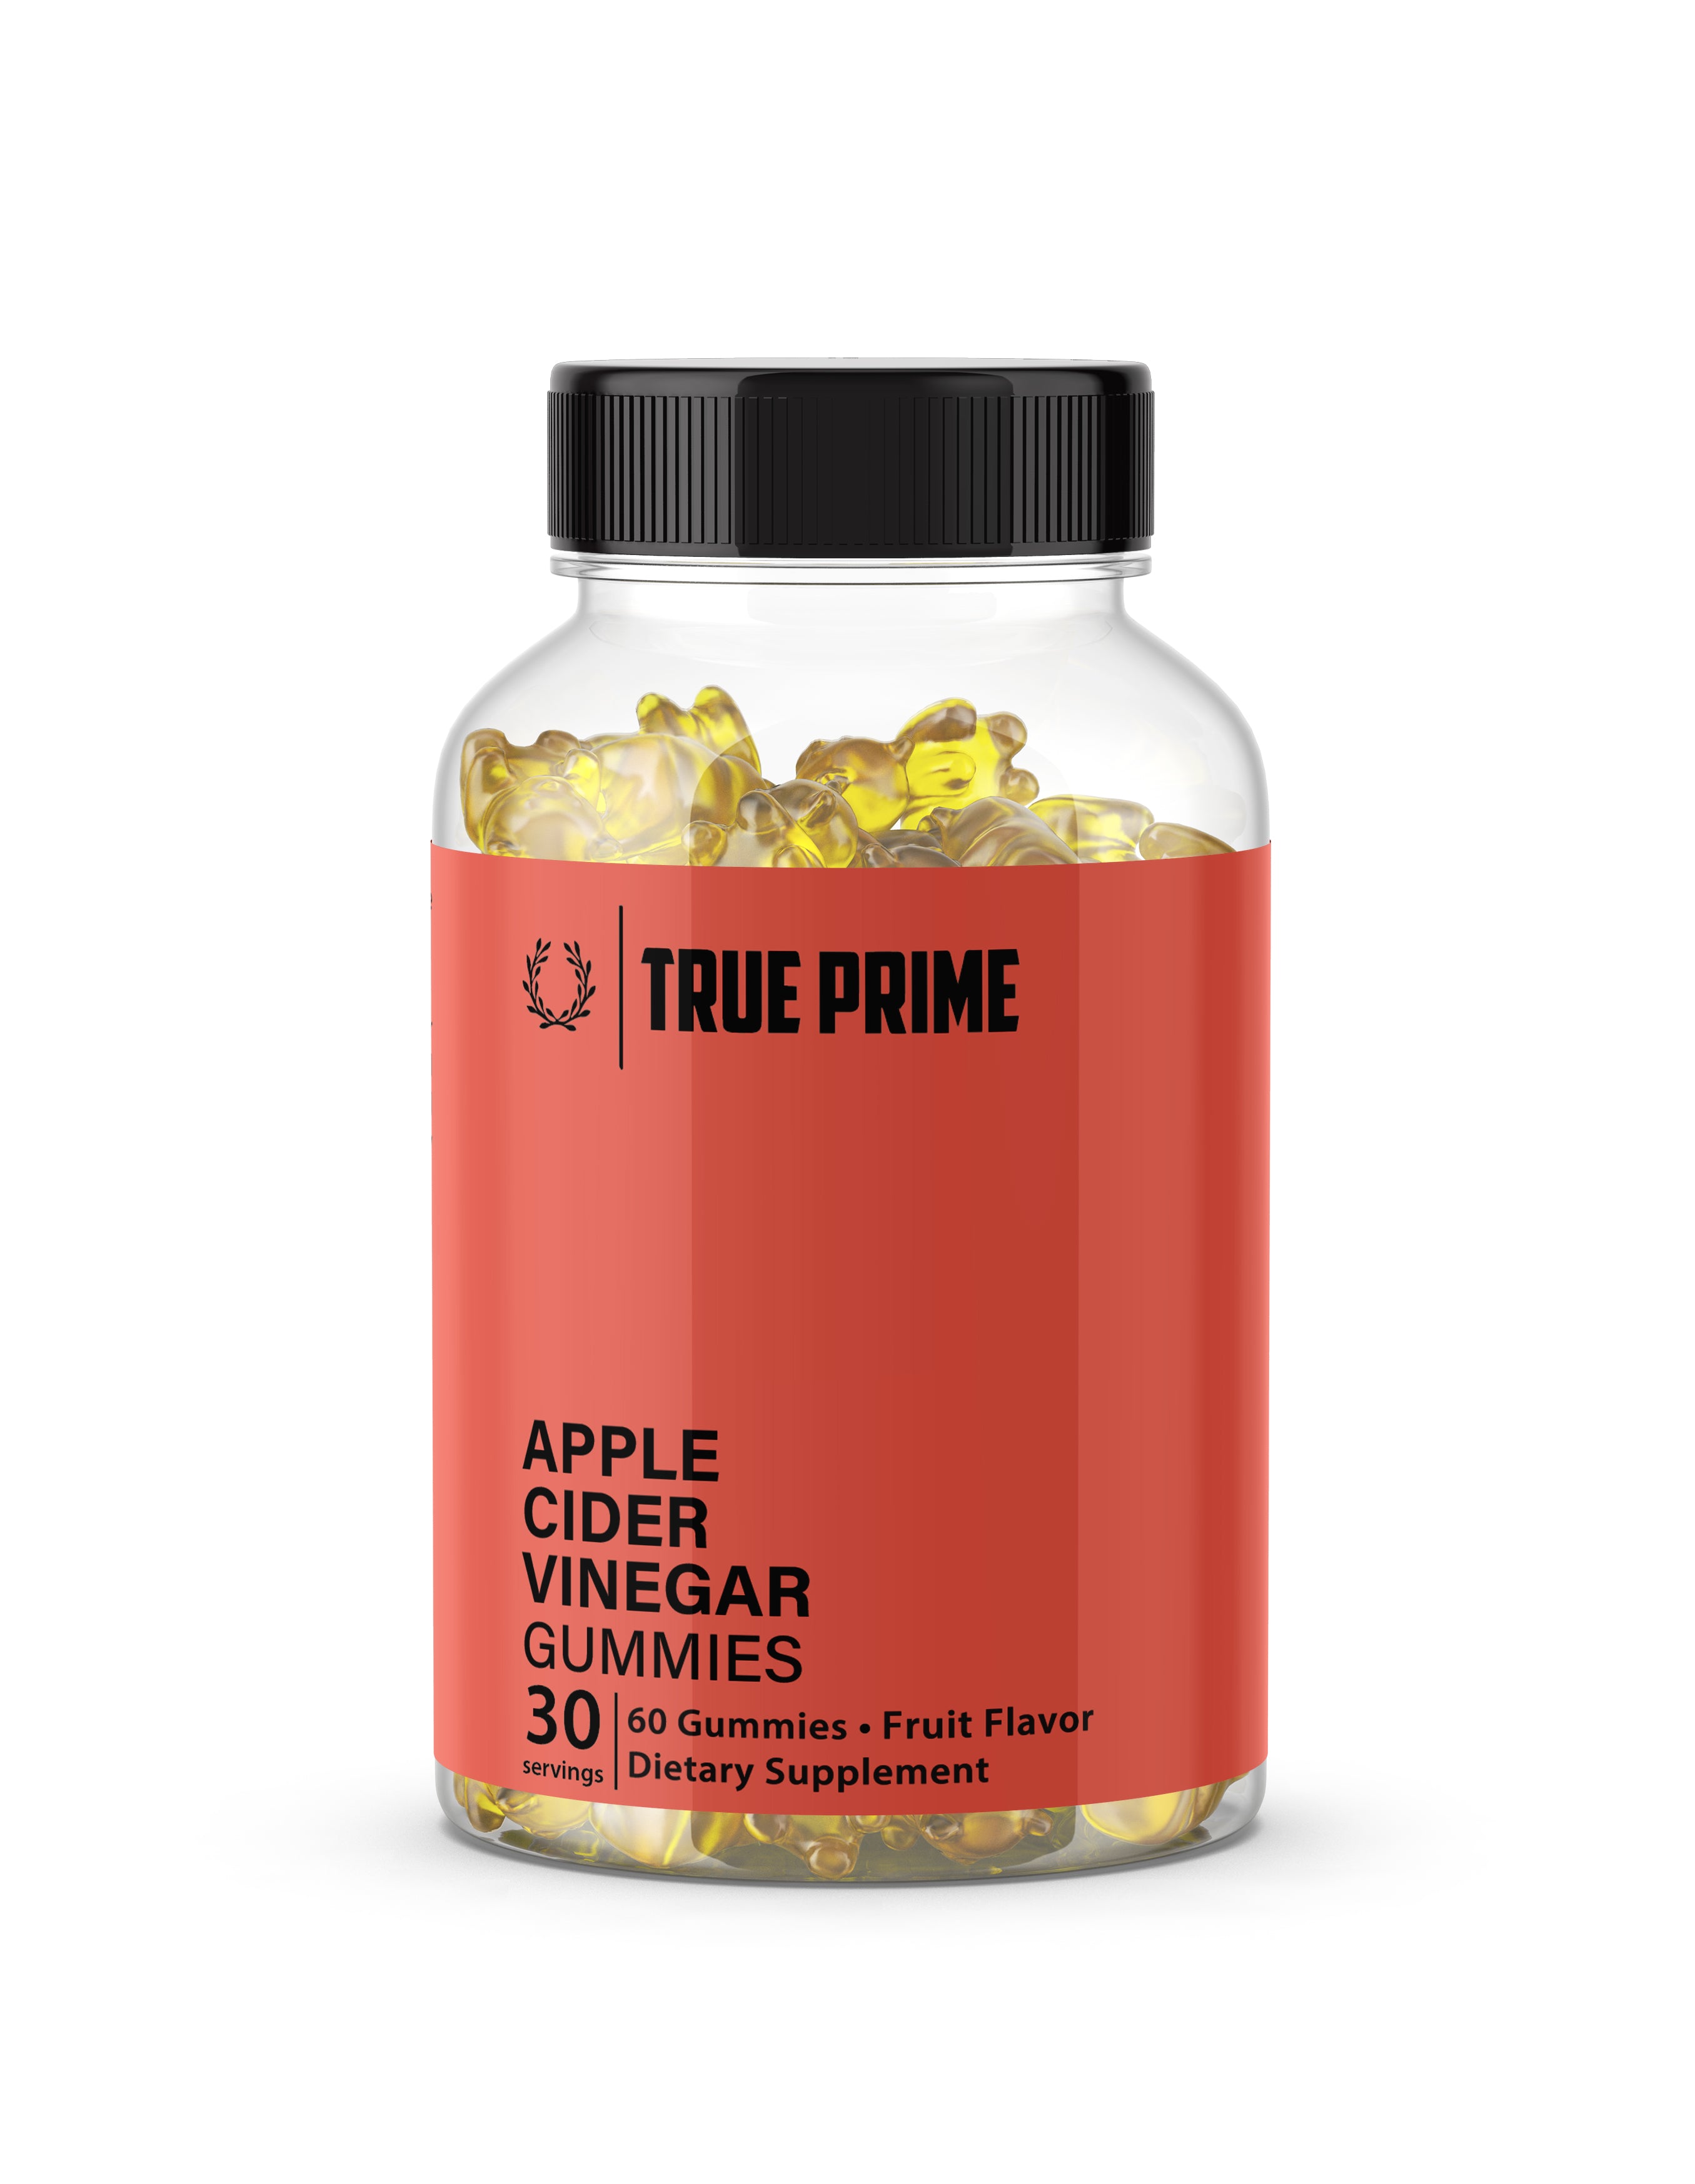 Apple Cider Vinegar Gummies - 60 Chewable Gummies - True Prime Nutrition 